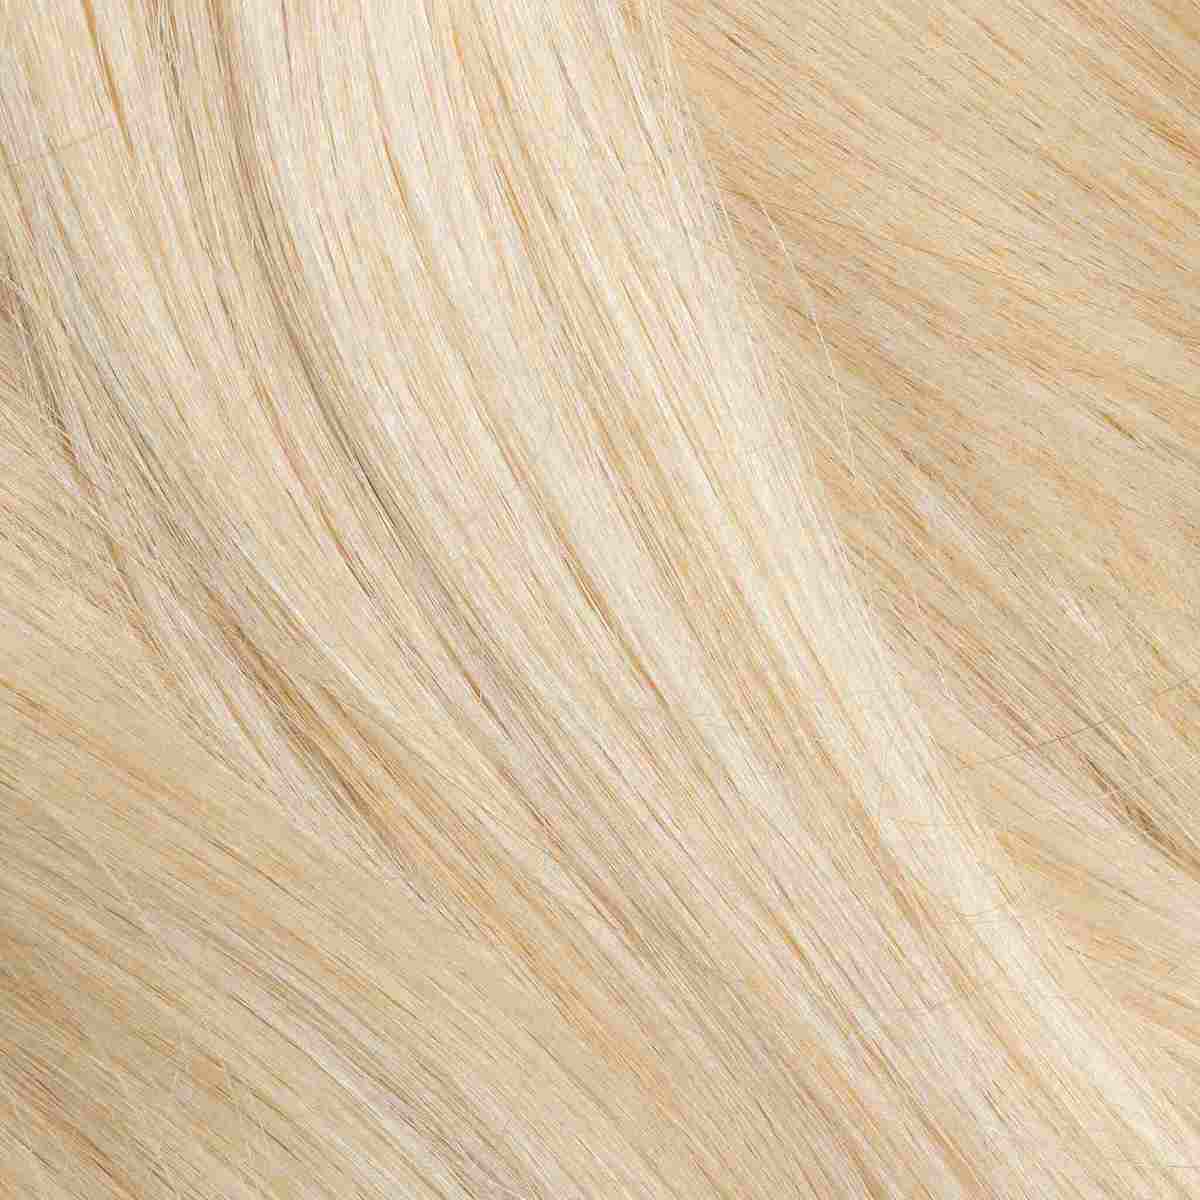 K-Tip 24" 25g Professional Hair Extensions - #60 Ash Blonde